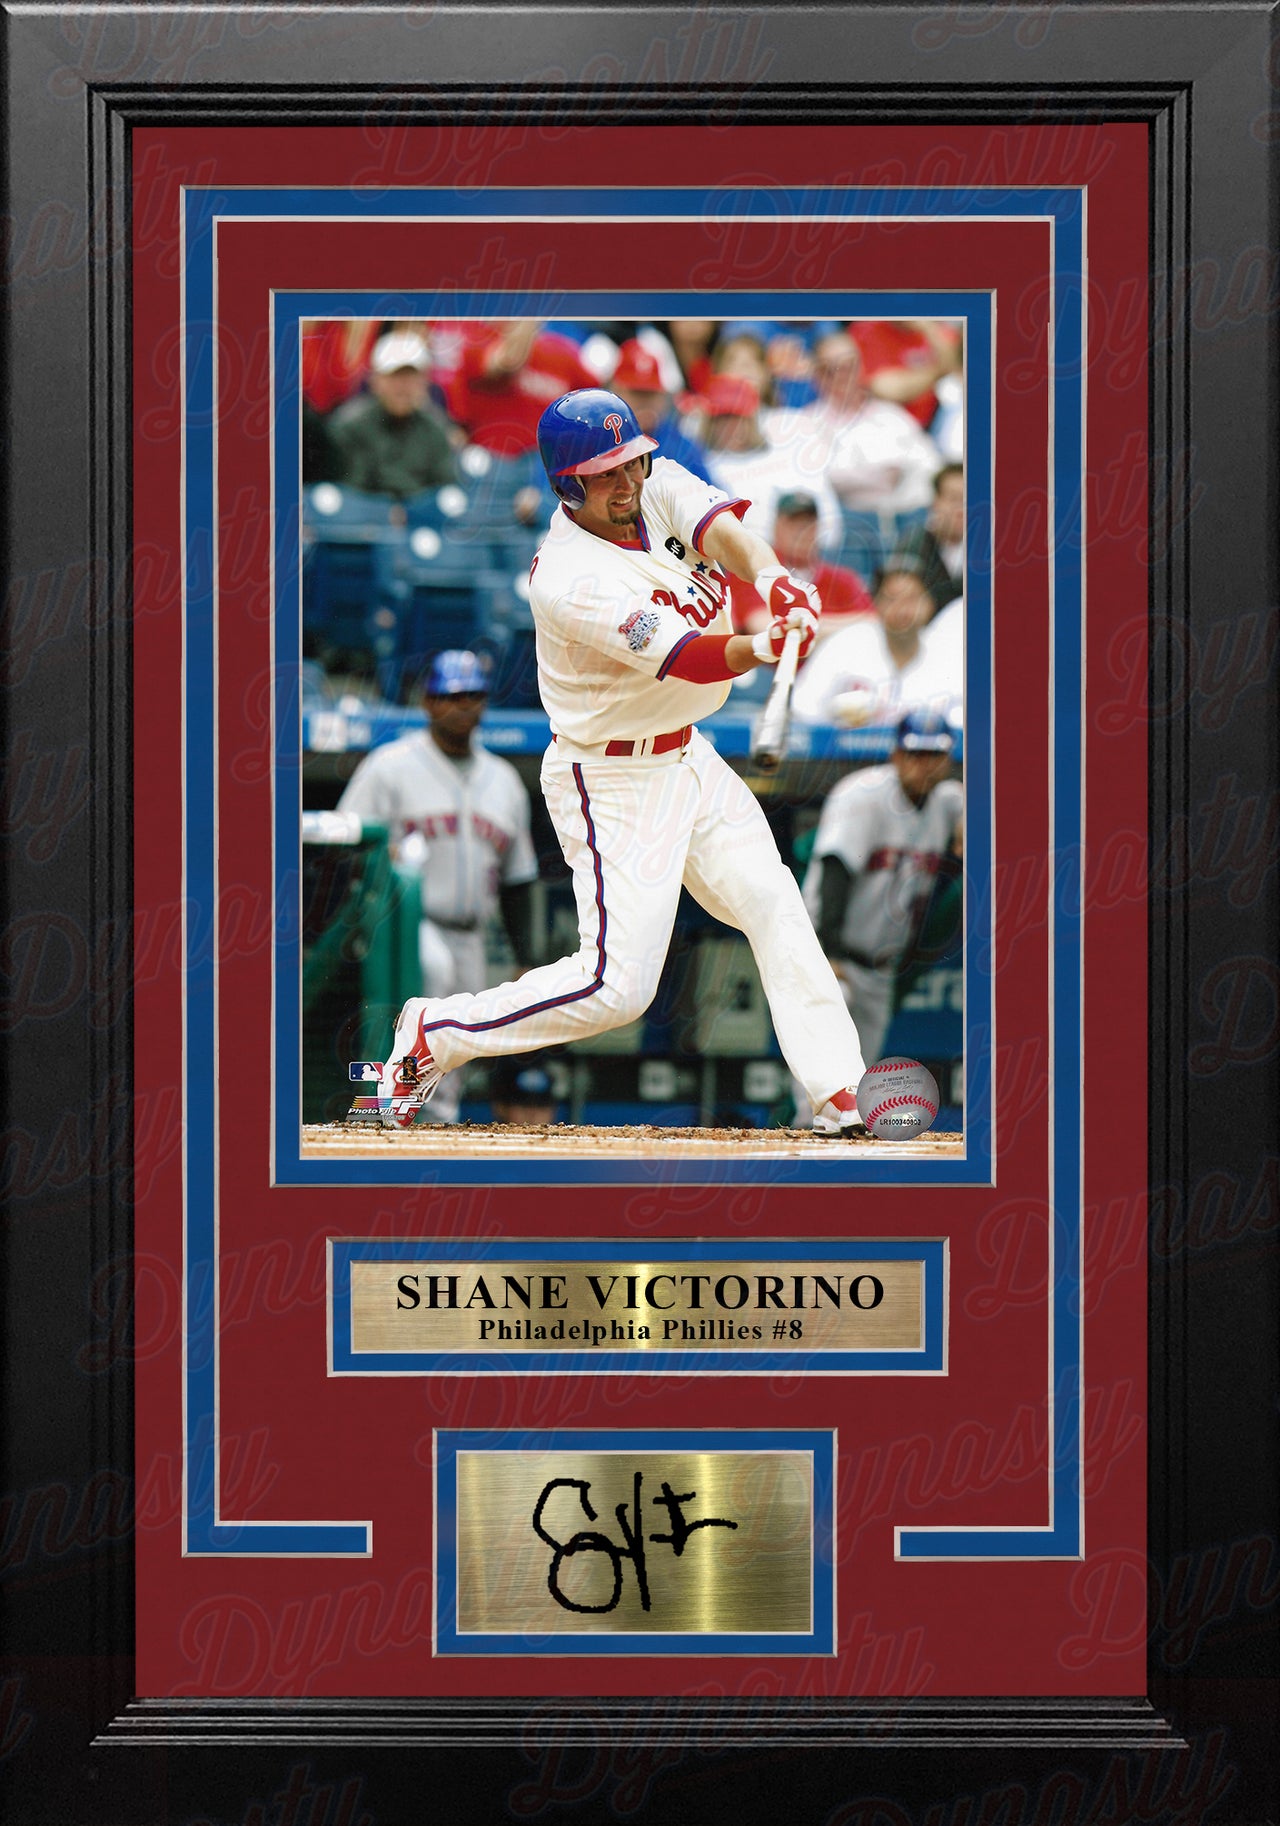 Shane Victorino Signed Framed 16x20 Philadelphia Phillies Photo